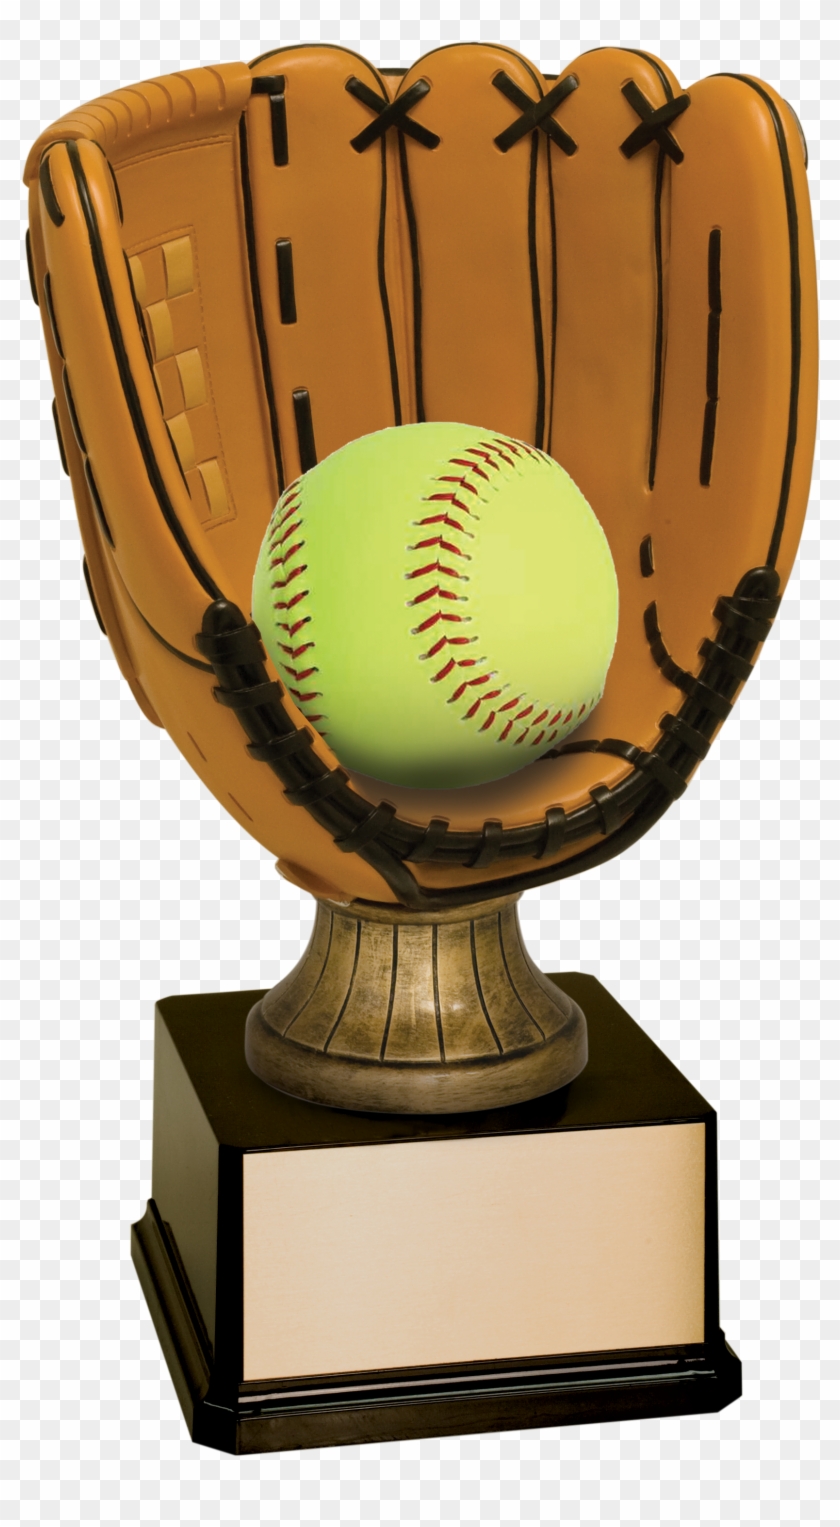 April 23, 2014 - Softball Glove Ball Holder Trophy #379814